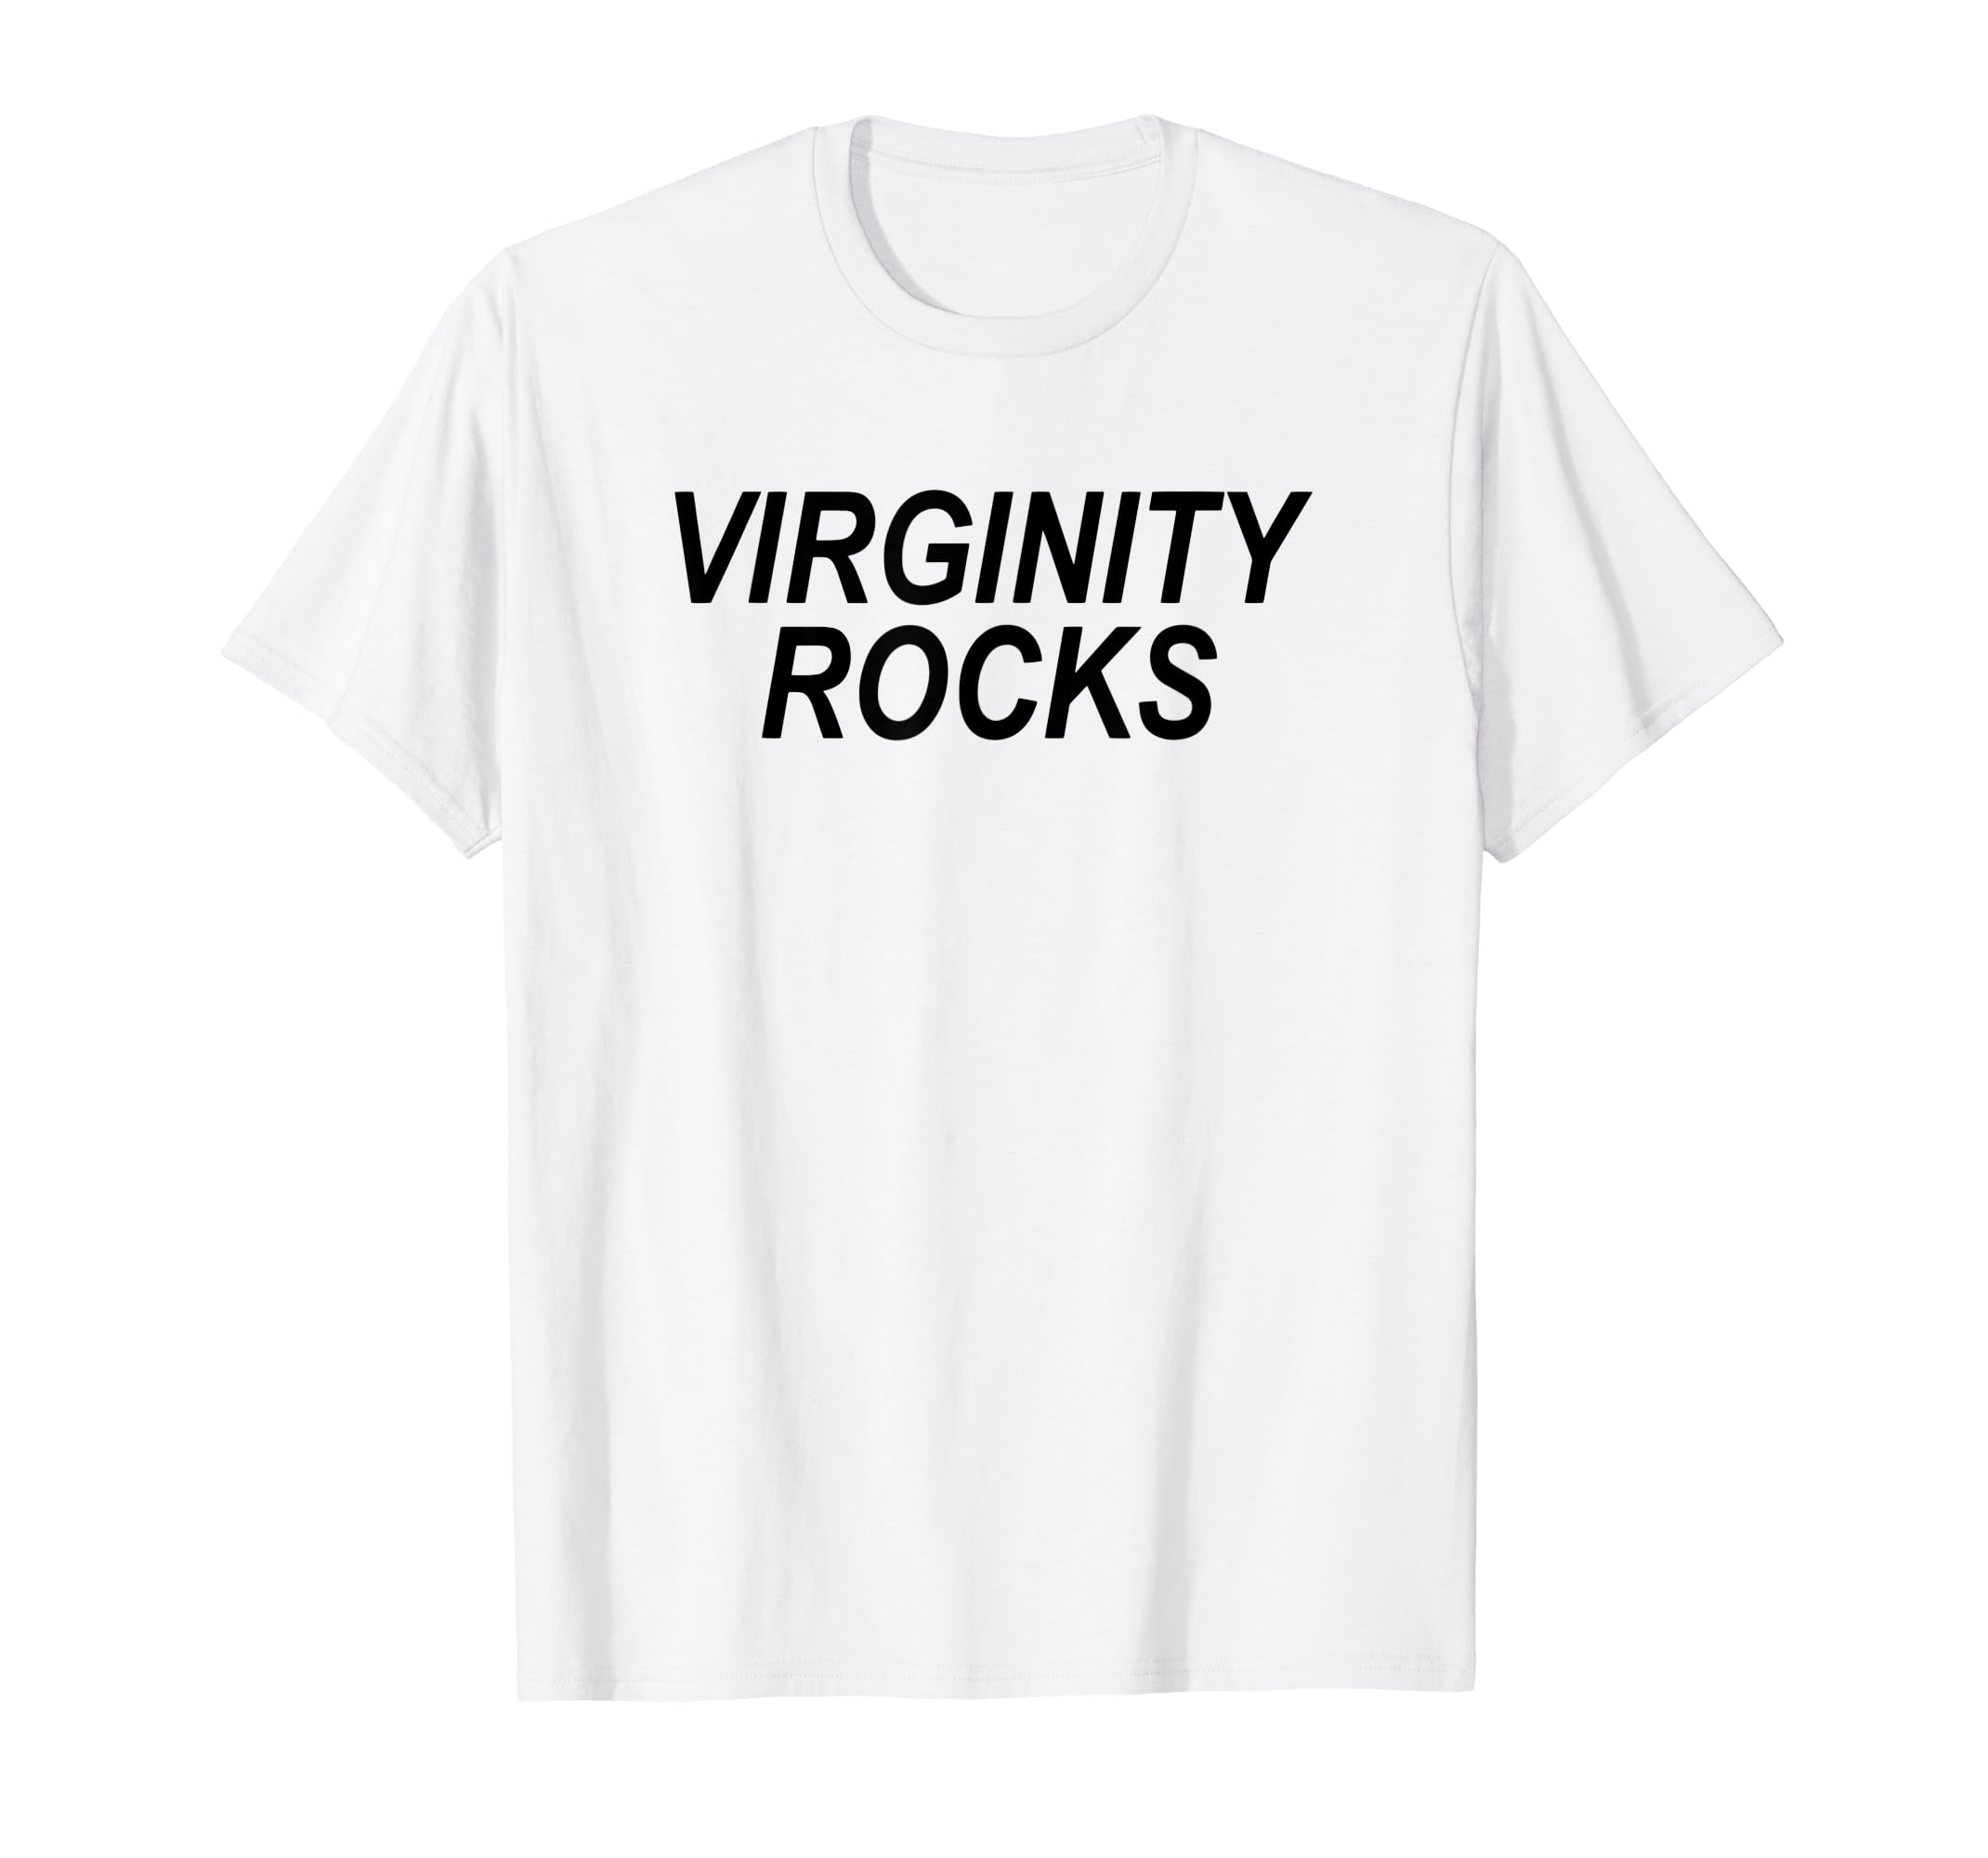 Virginity rocks t- shirts